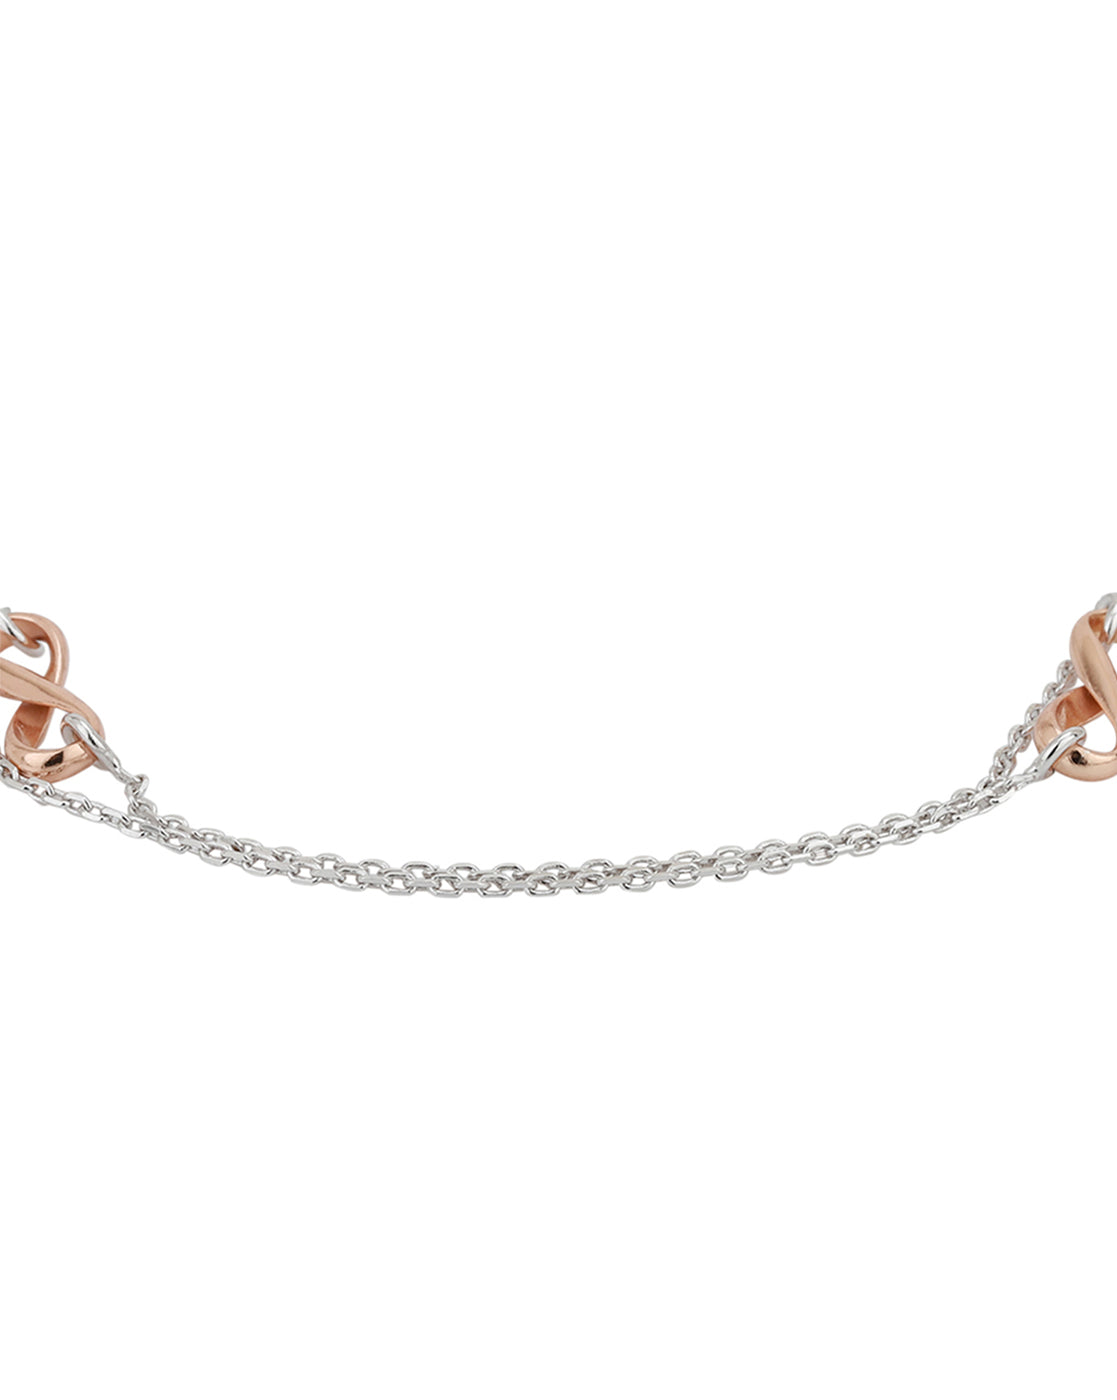 Carlton London Double Toned Rhodium Plated Infinity Link Bracelet